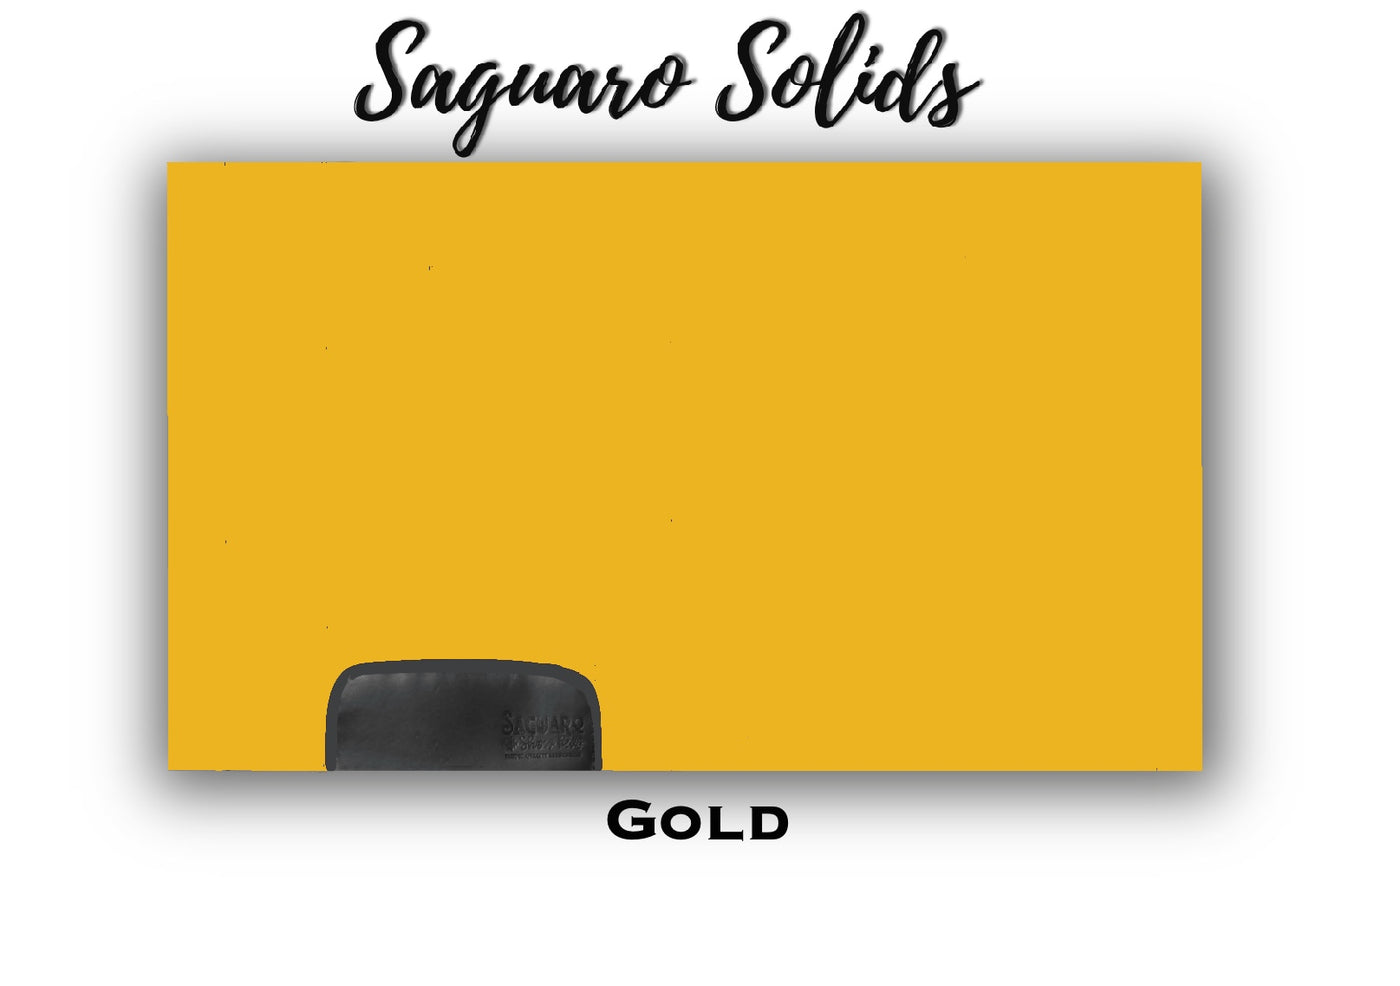 Saguaro Solid "Gold" Show Pad (SEMI-CUSTOM)